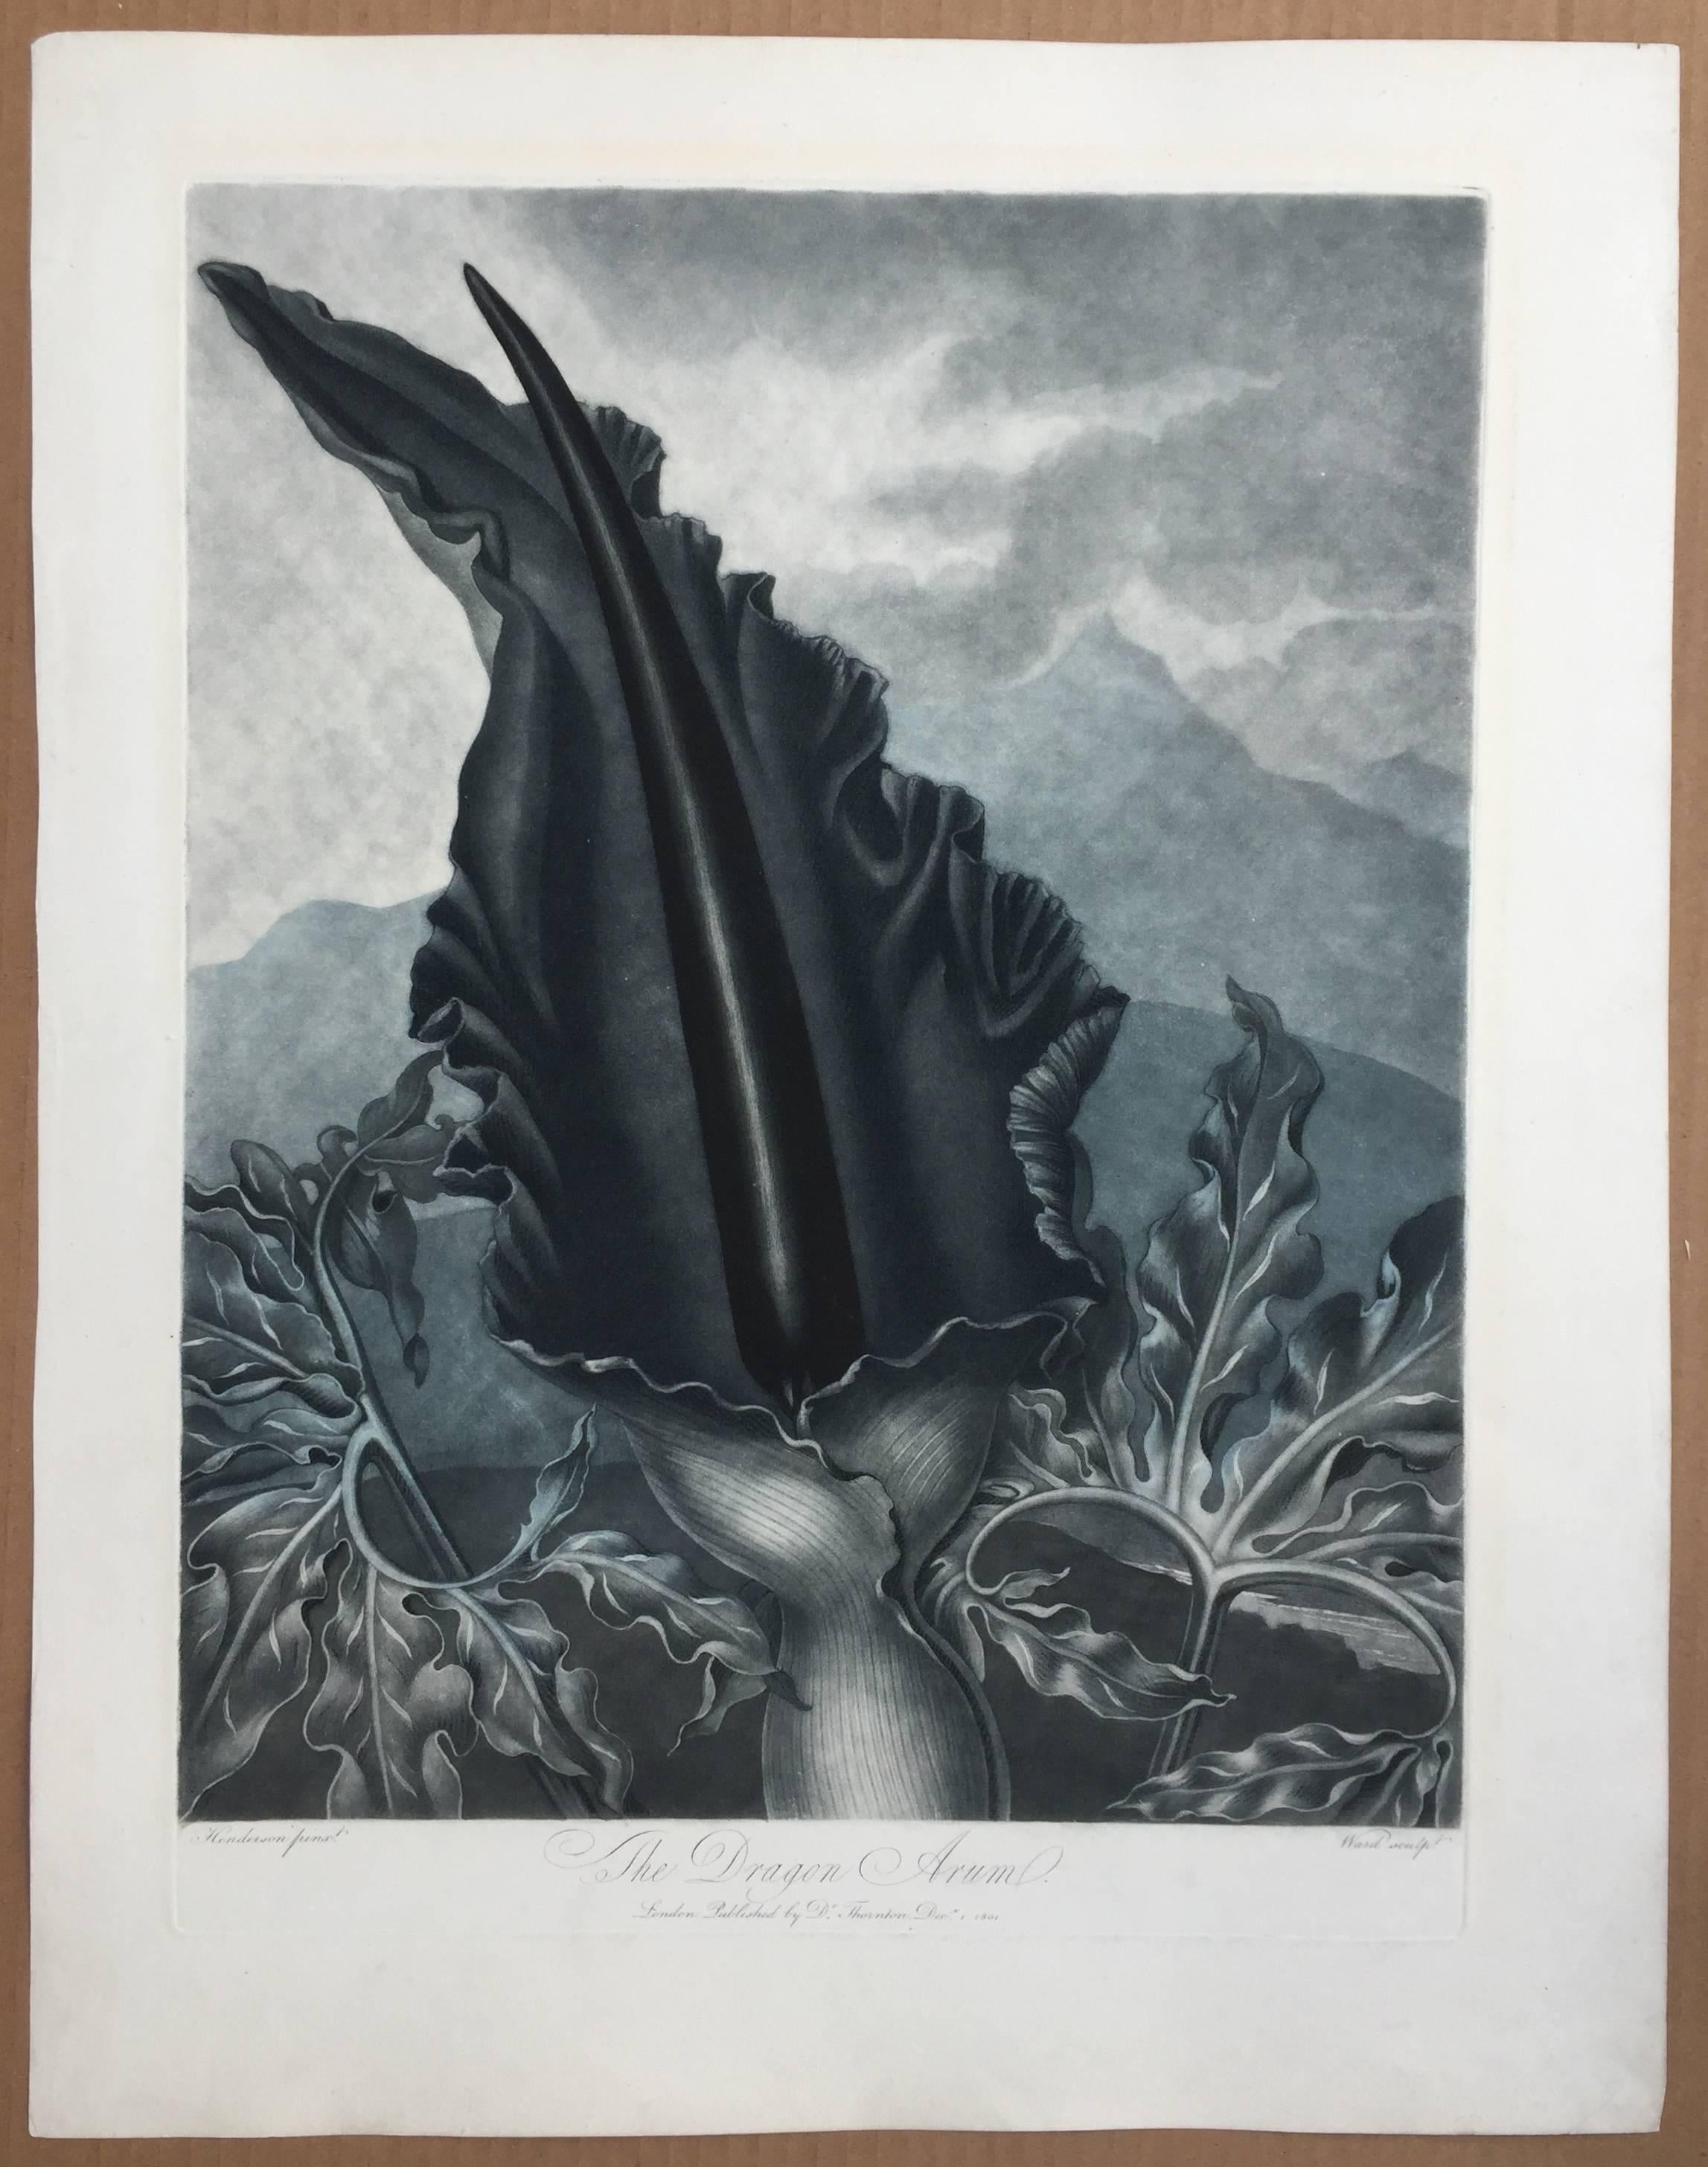 THE DRAGON ARUM - Old Masters Print by Dr. Robert John Thornton